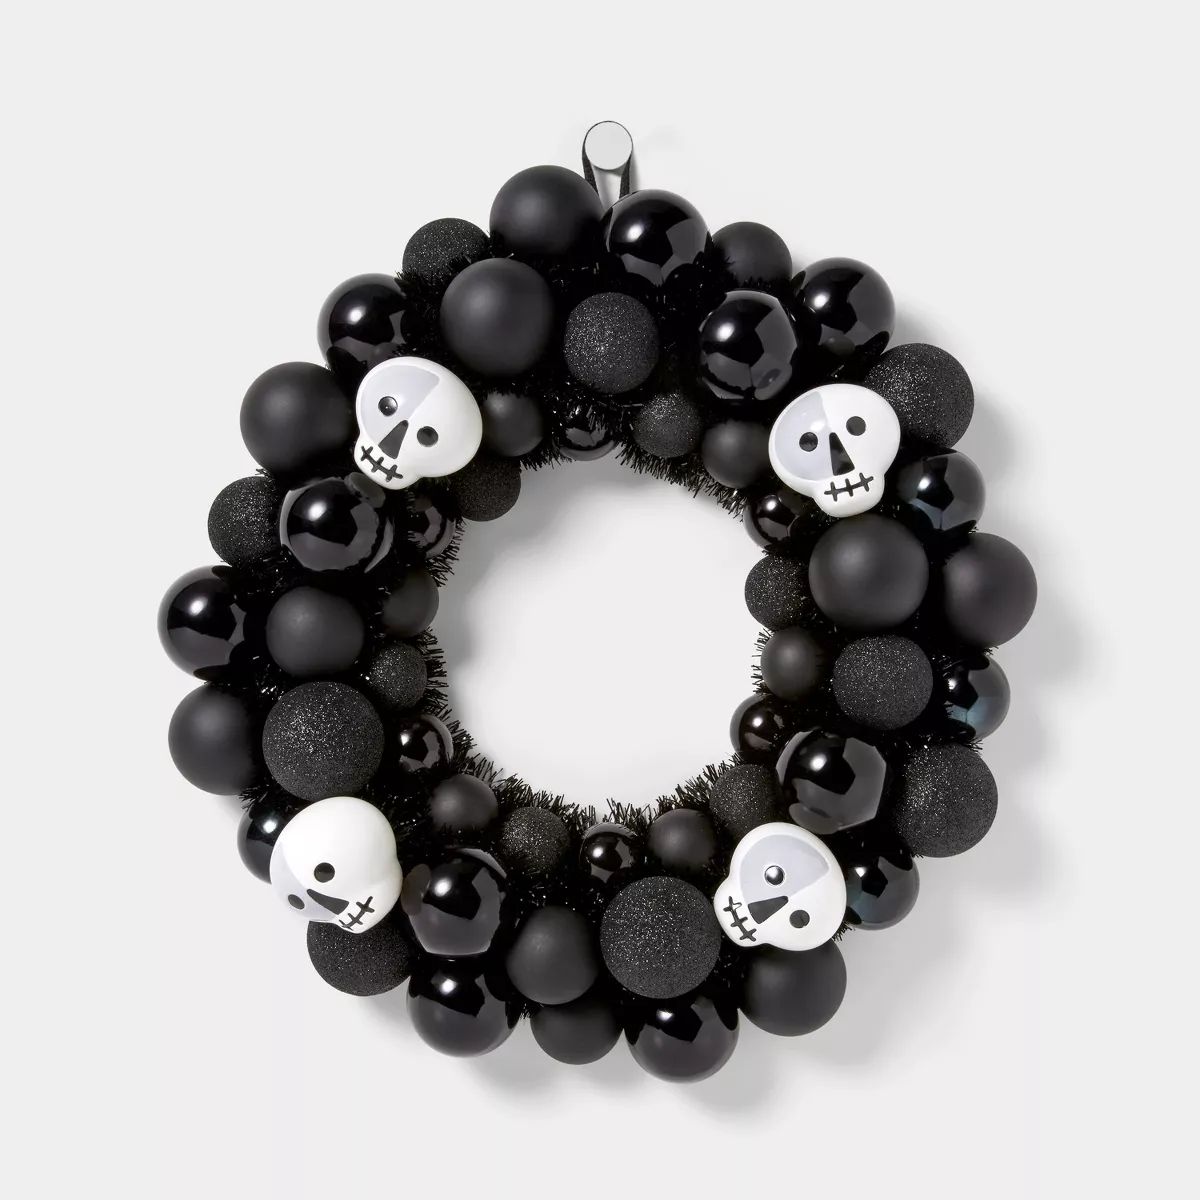 Festival of Frights Skull Black and White Shatterproof Halloween Wreath - Hyde & EEK! Boutique™ | Target